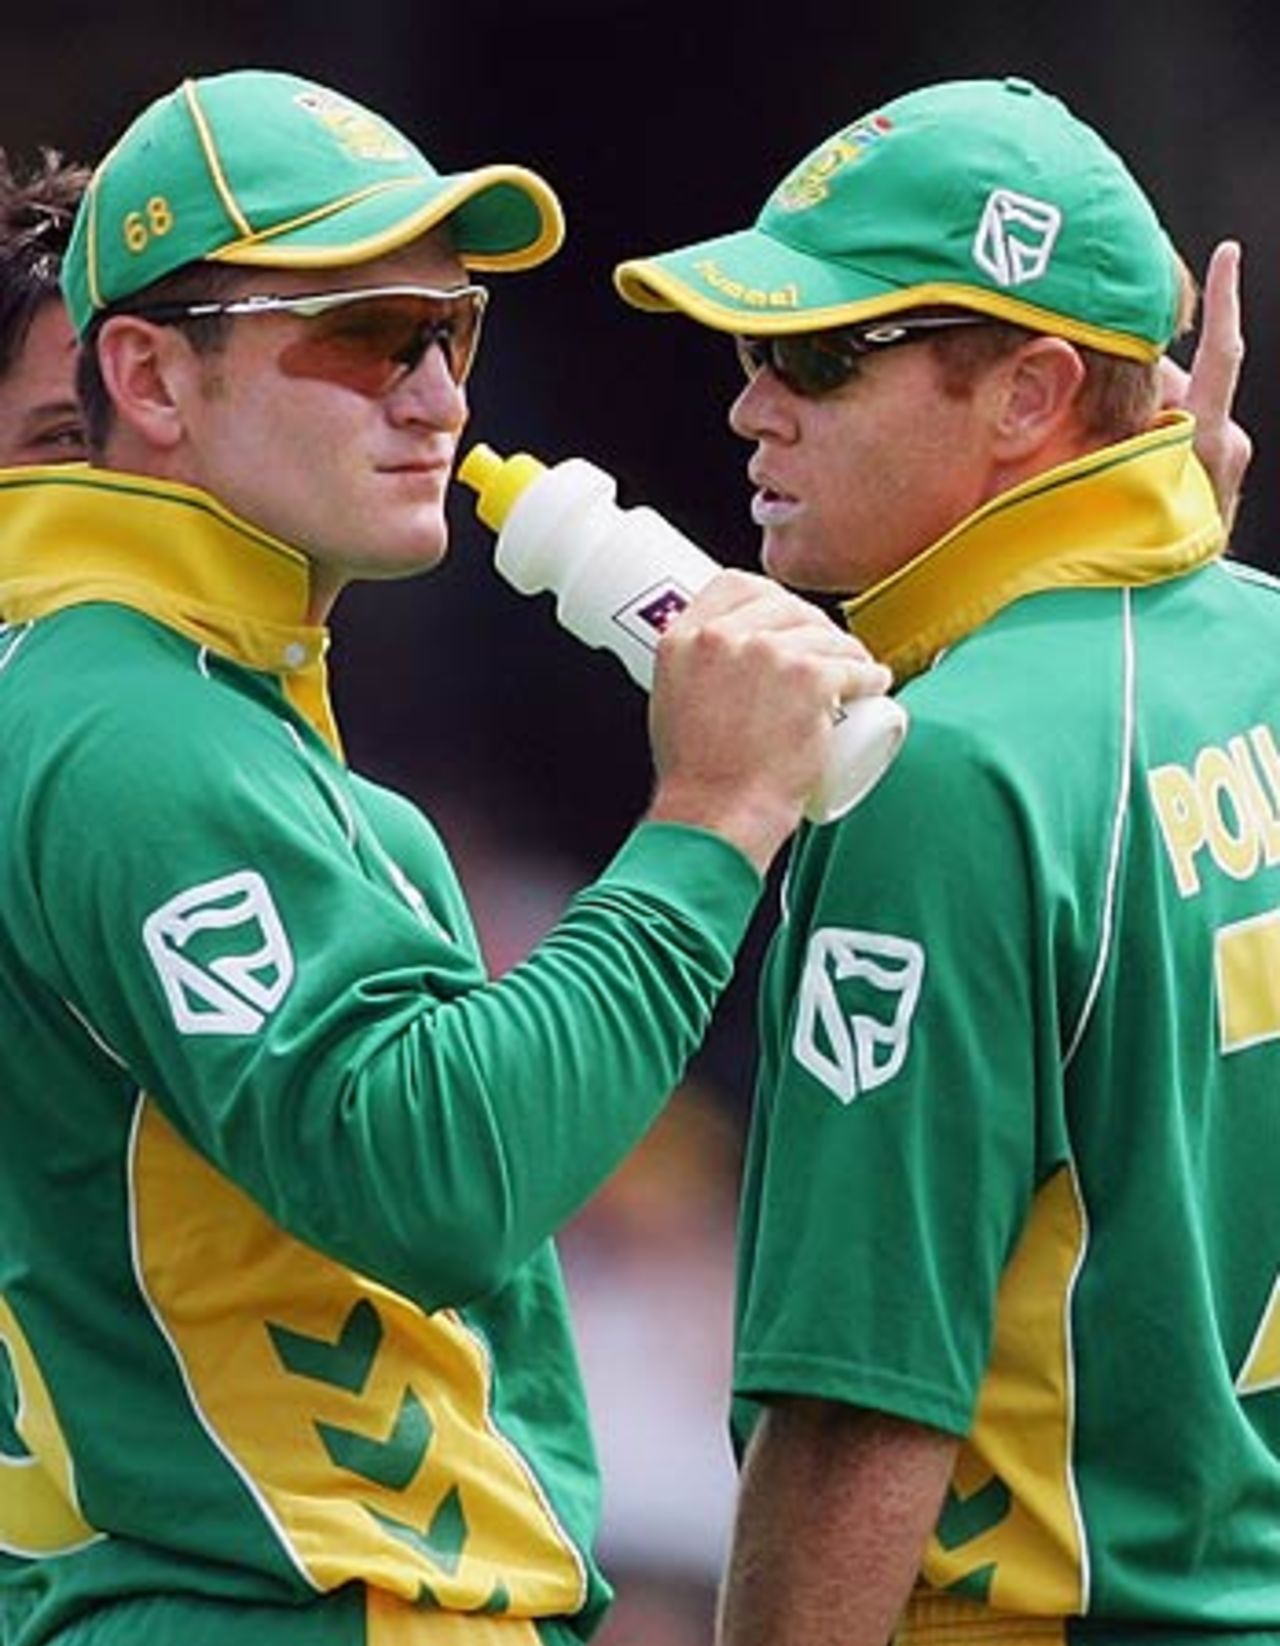 Graeme Smith and Shaun Pollock talk tactics during a drinks break, Australia v South Africa, VB Series, Sydney, February 5, 2006